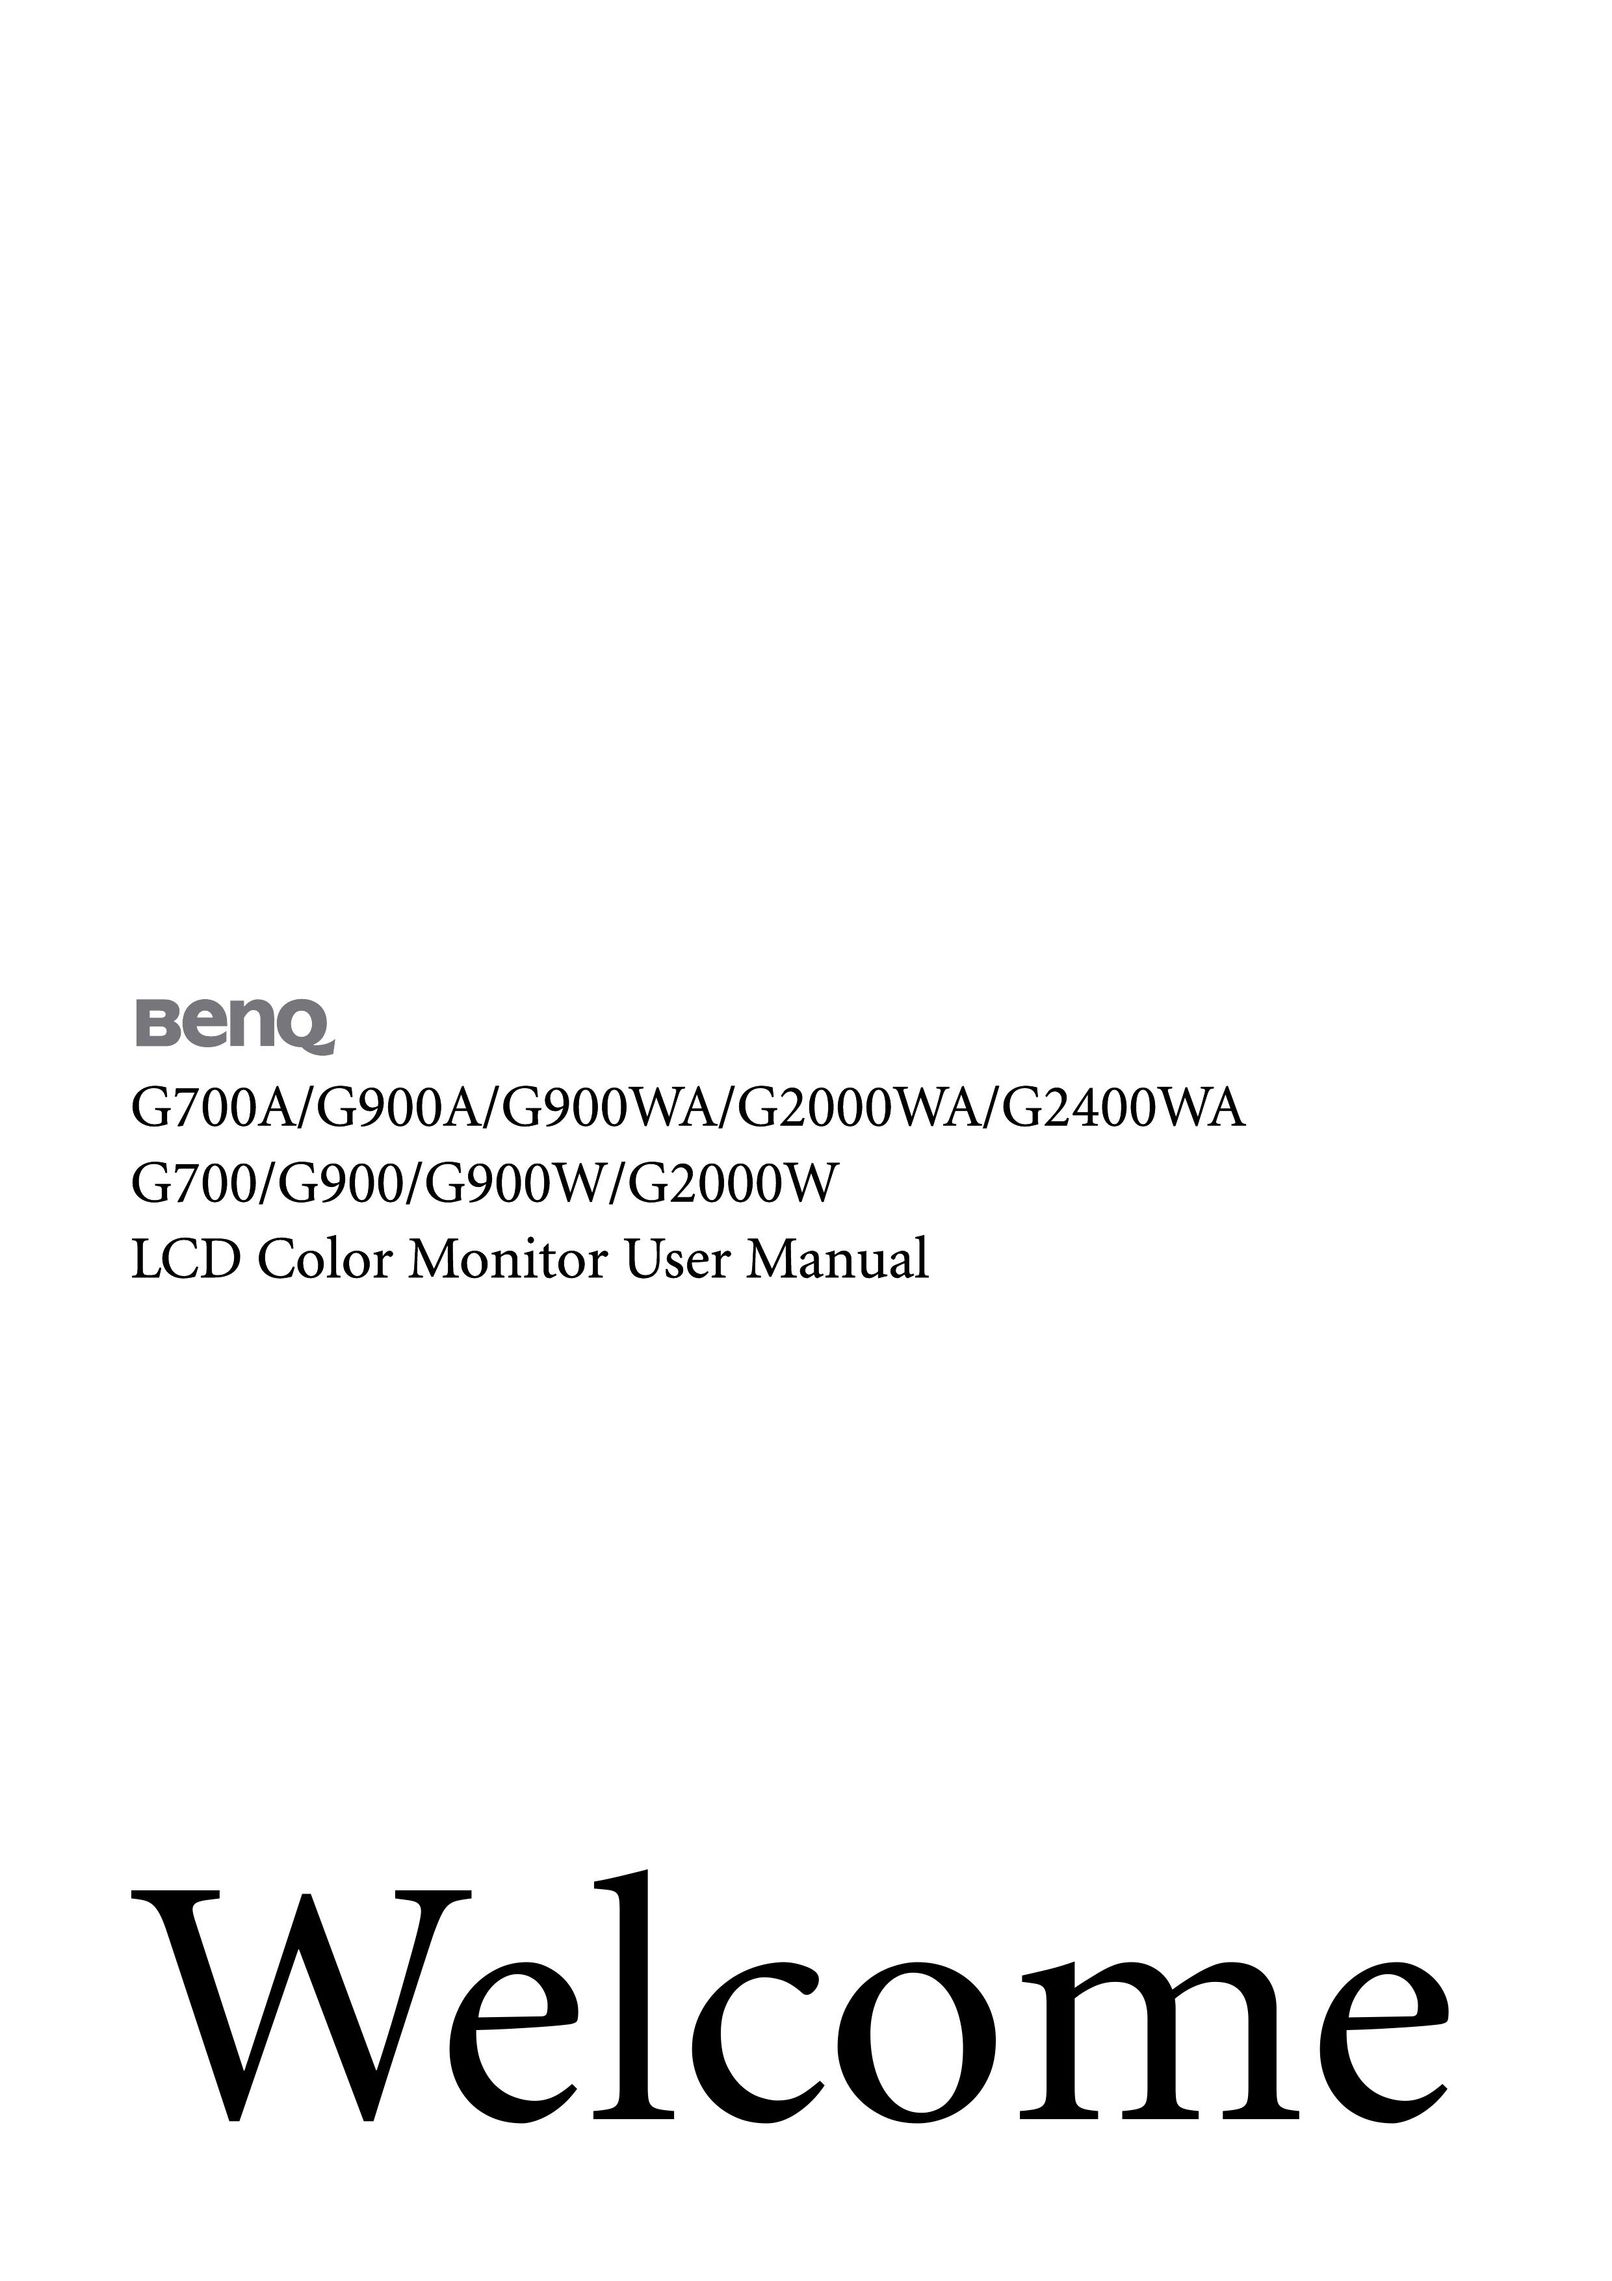 BenQ G2400WA Computer Monitor User Manual